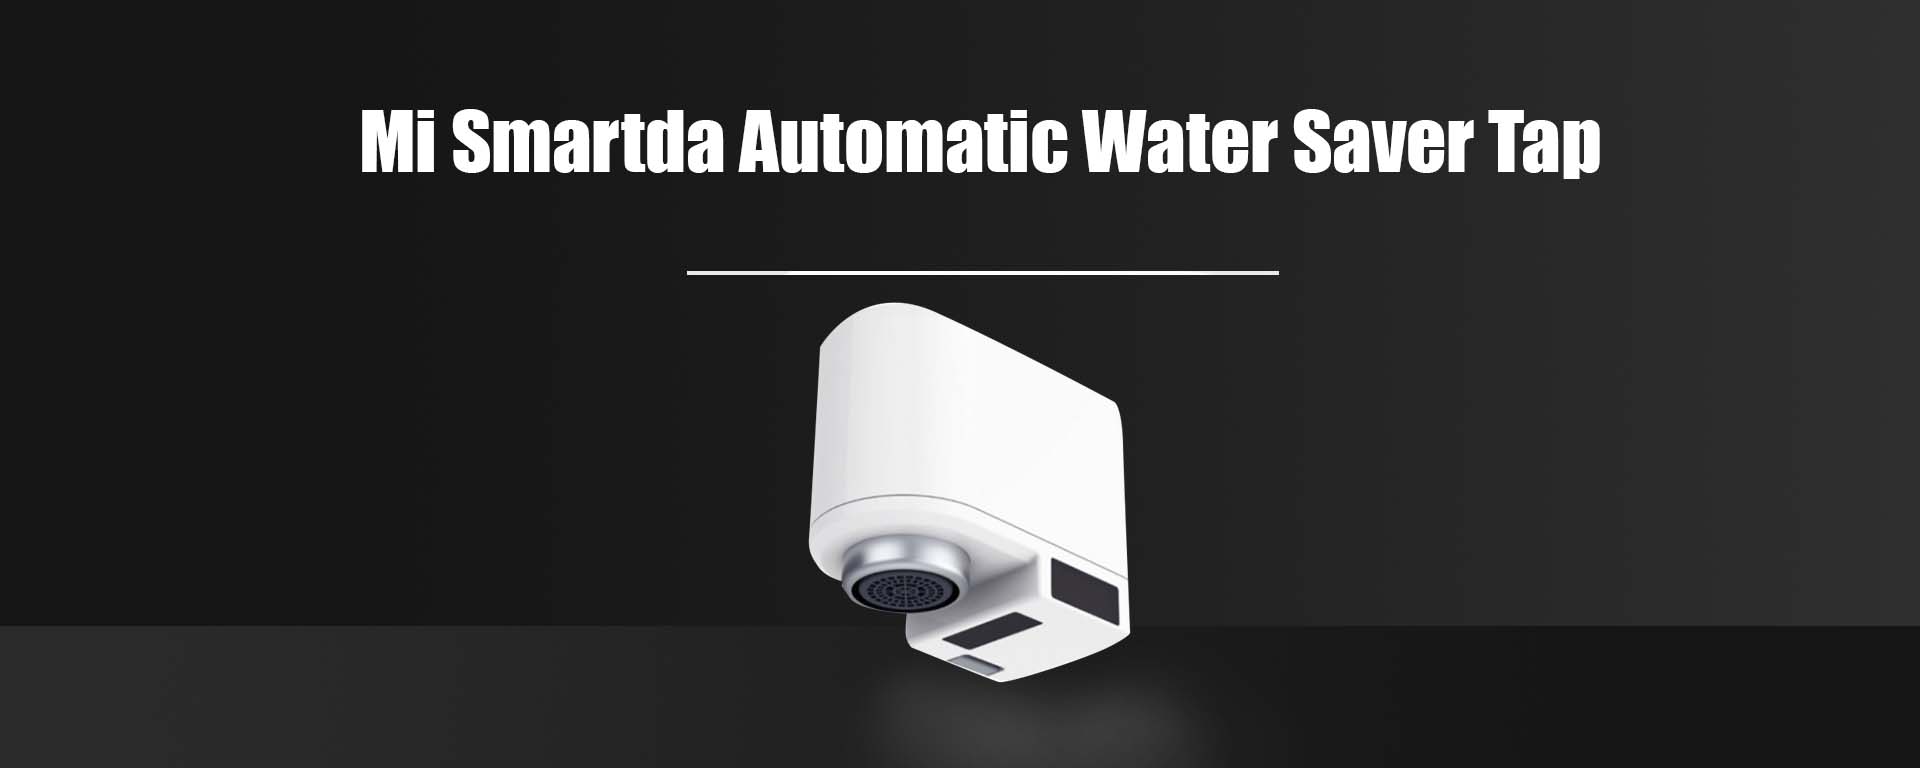 Mi Smartda Automatic Water Saver Tap